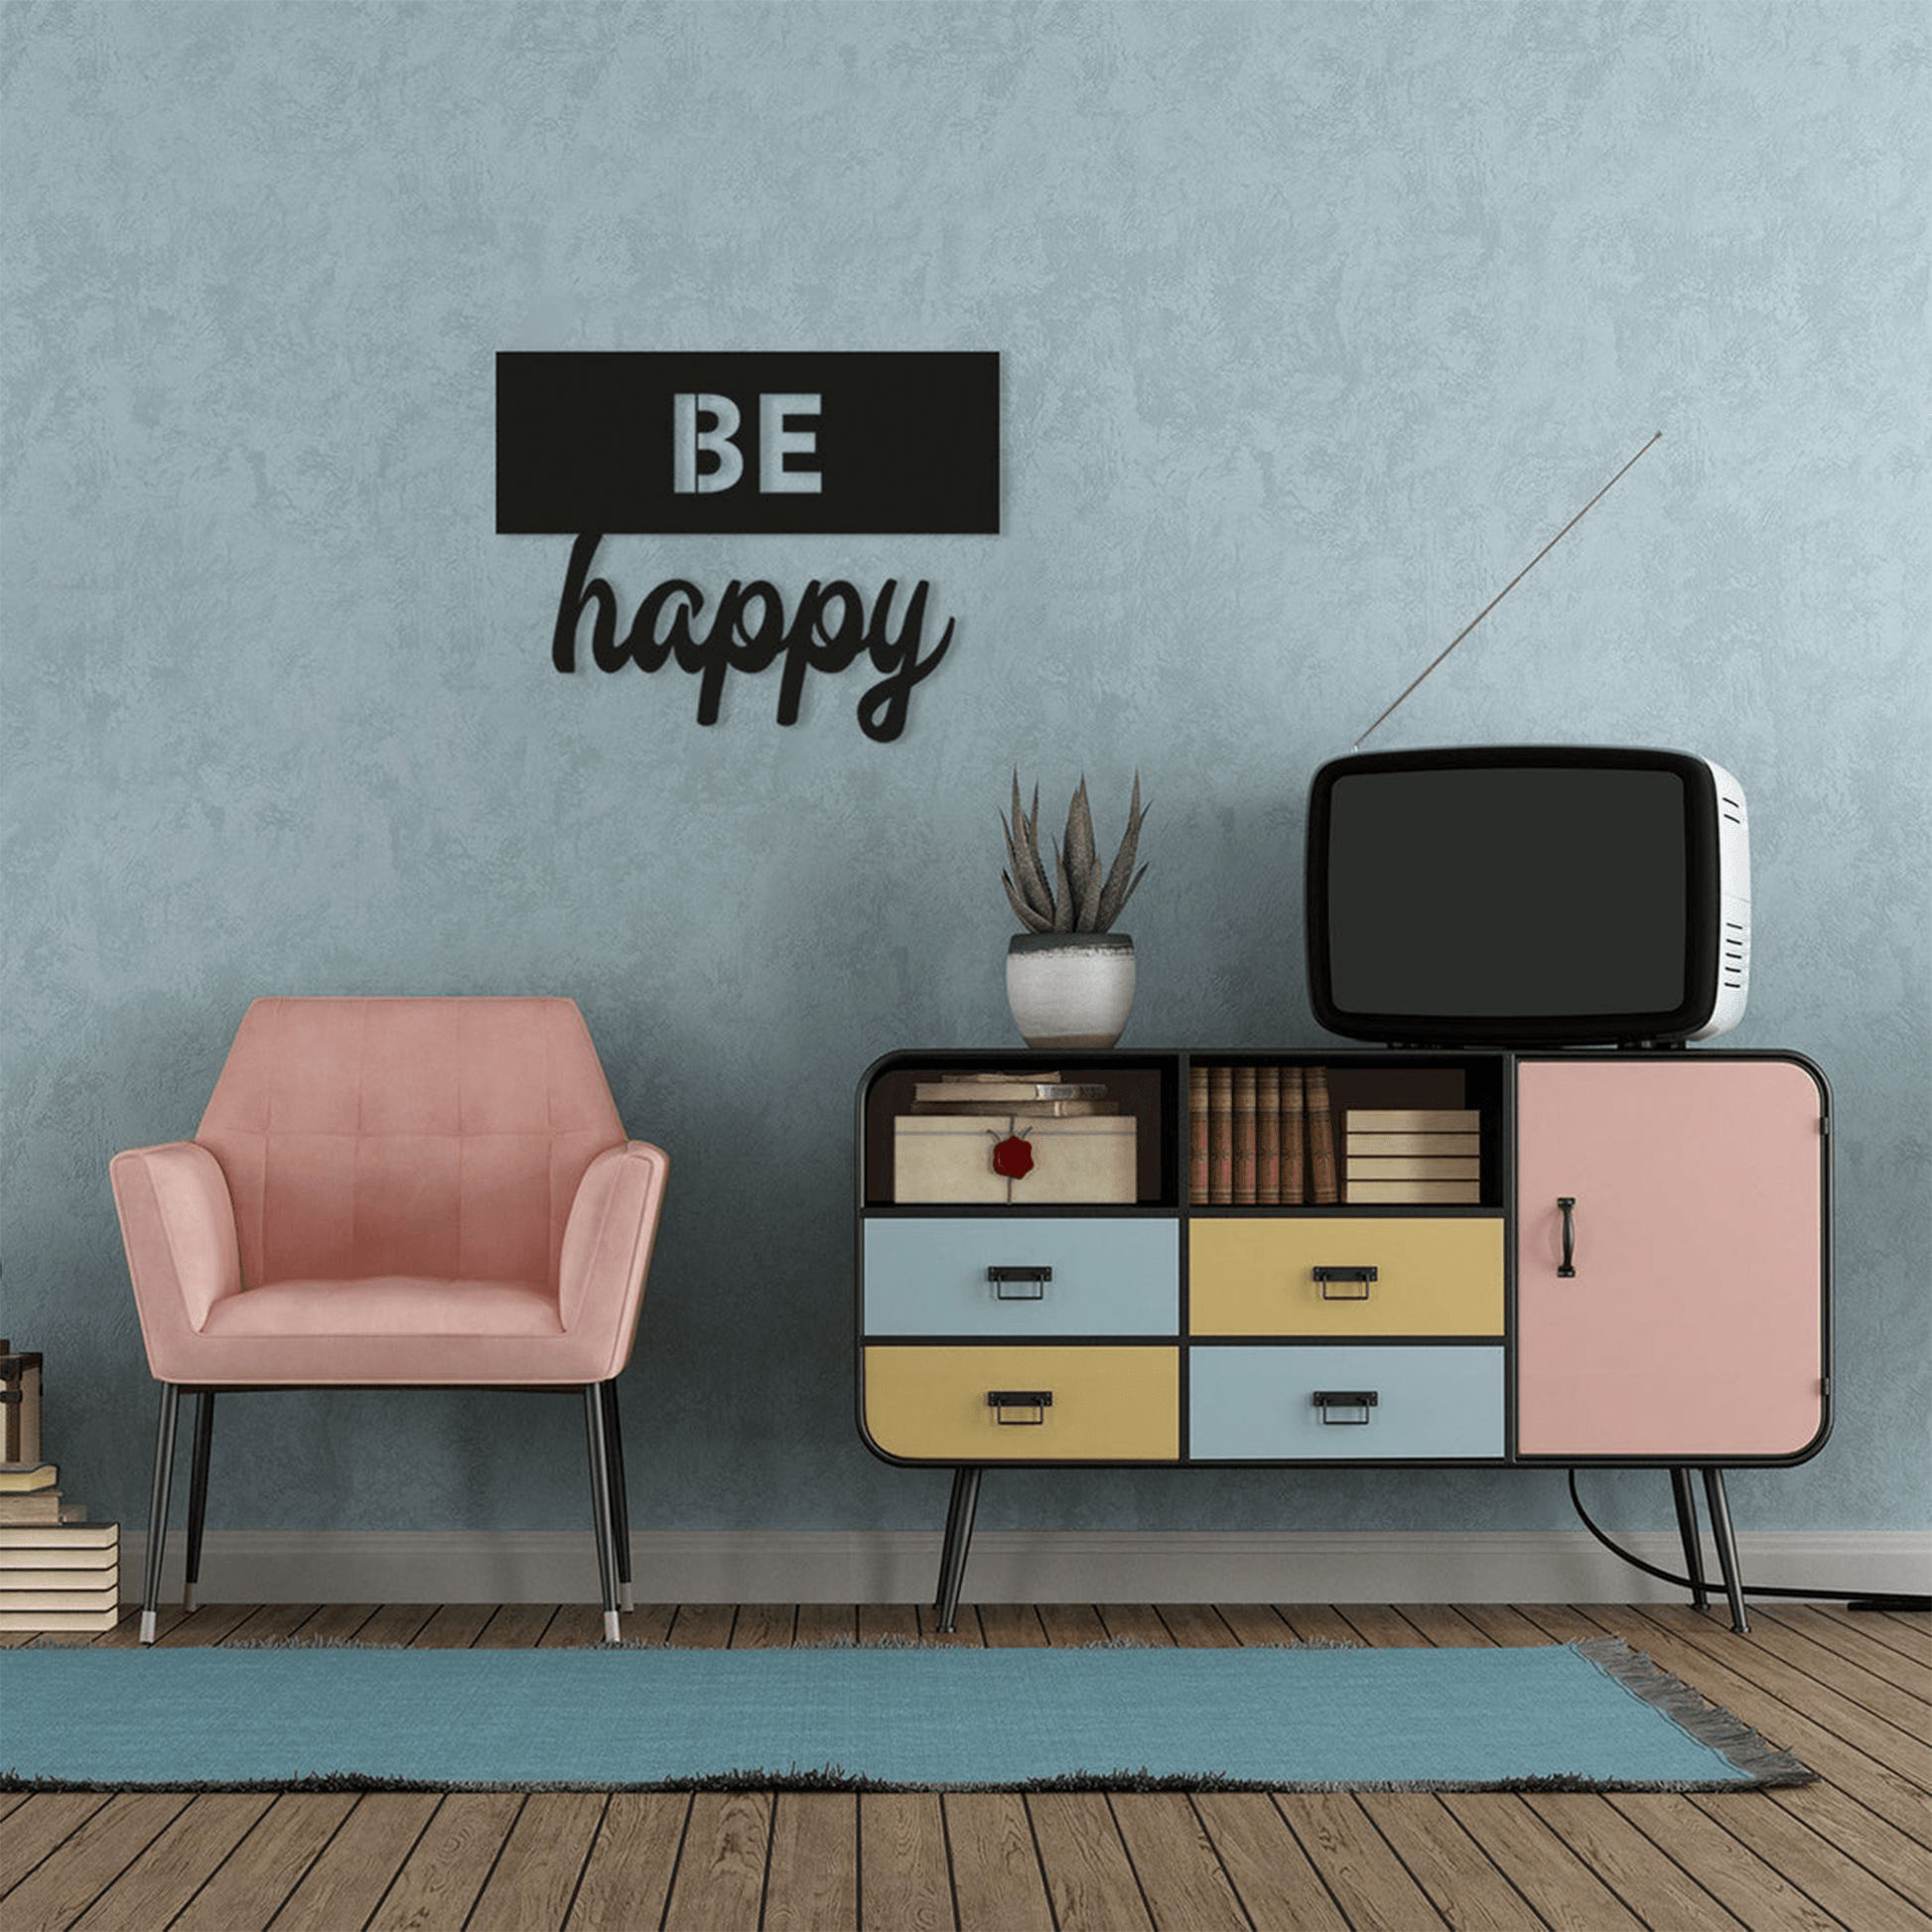 BE HAPPY, Μεταλλικό διακοσμητικό τοίχου - lovenwall